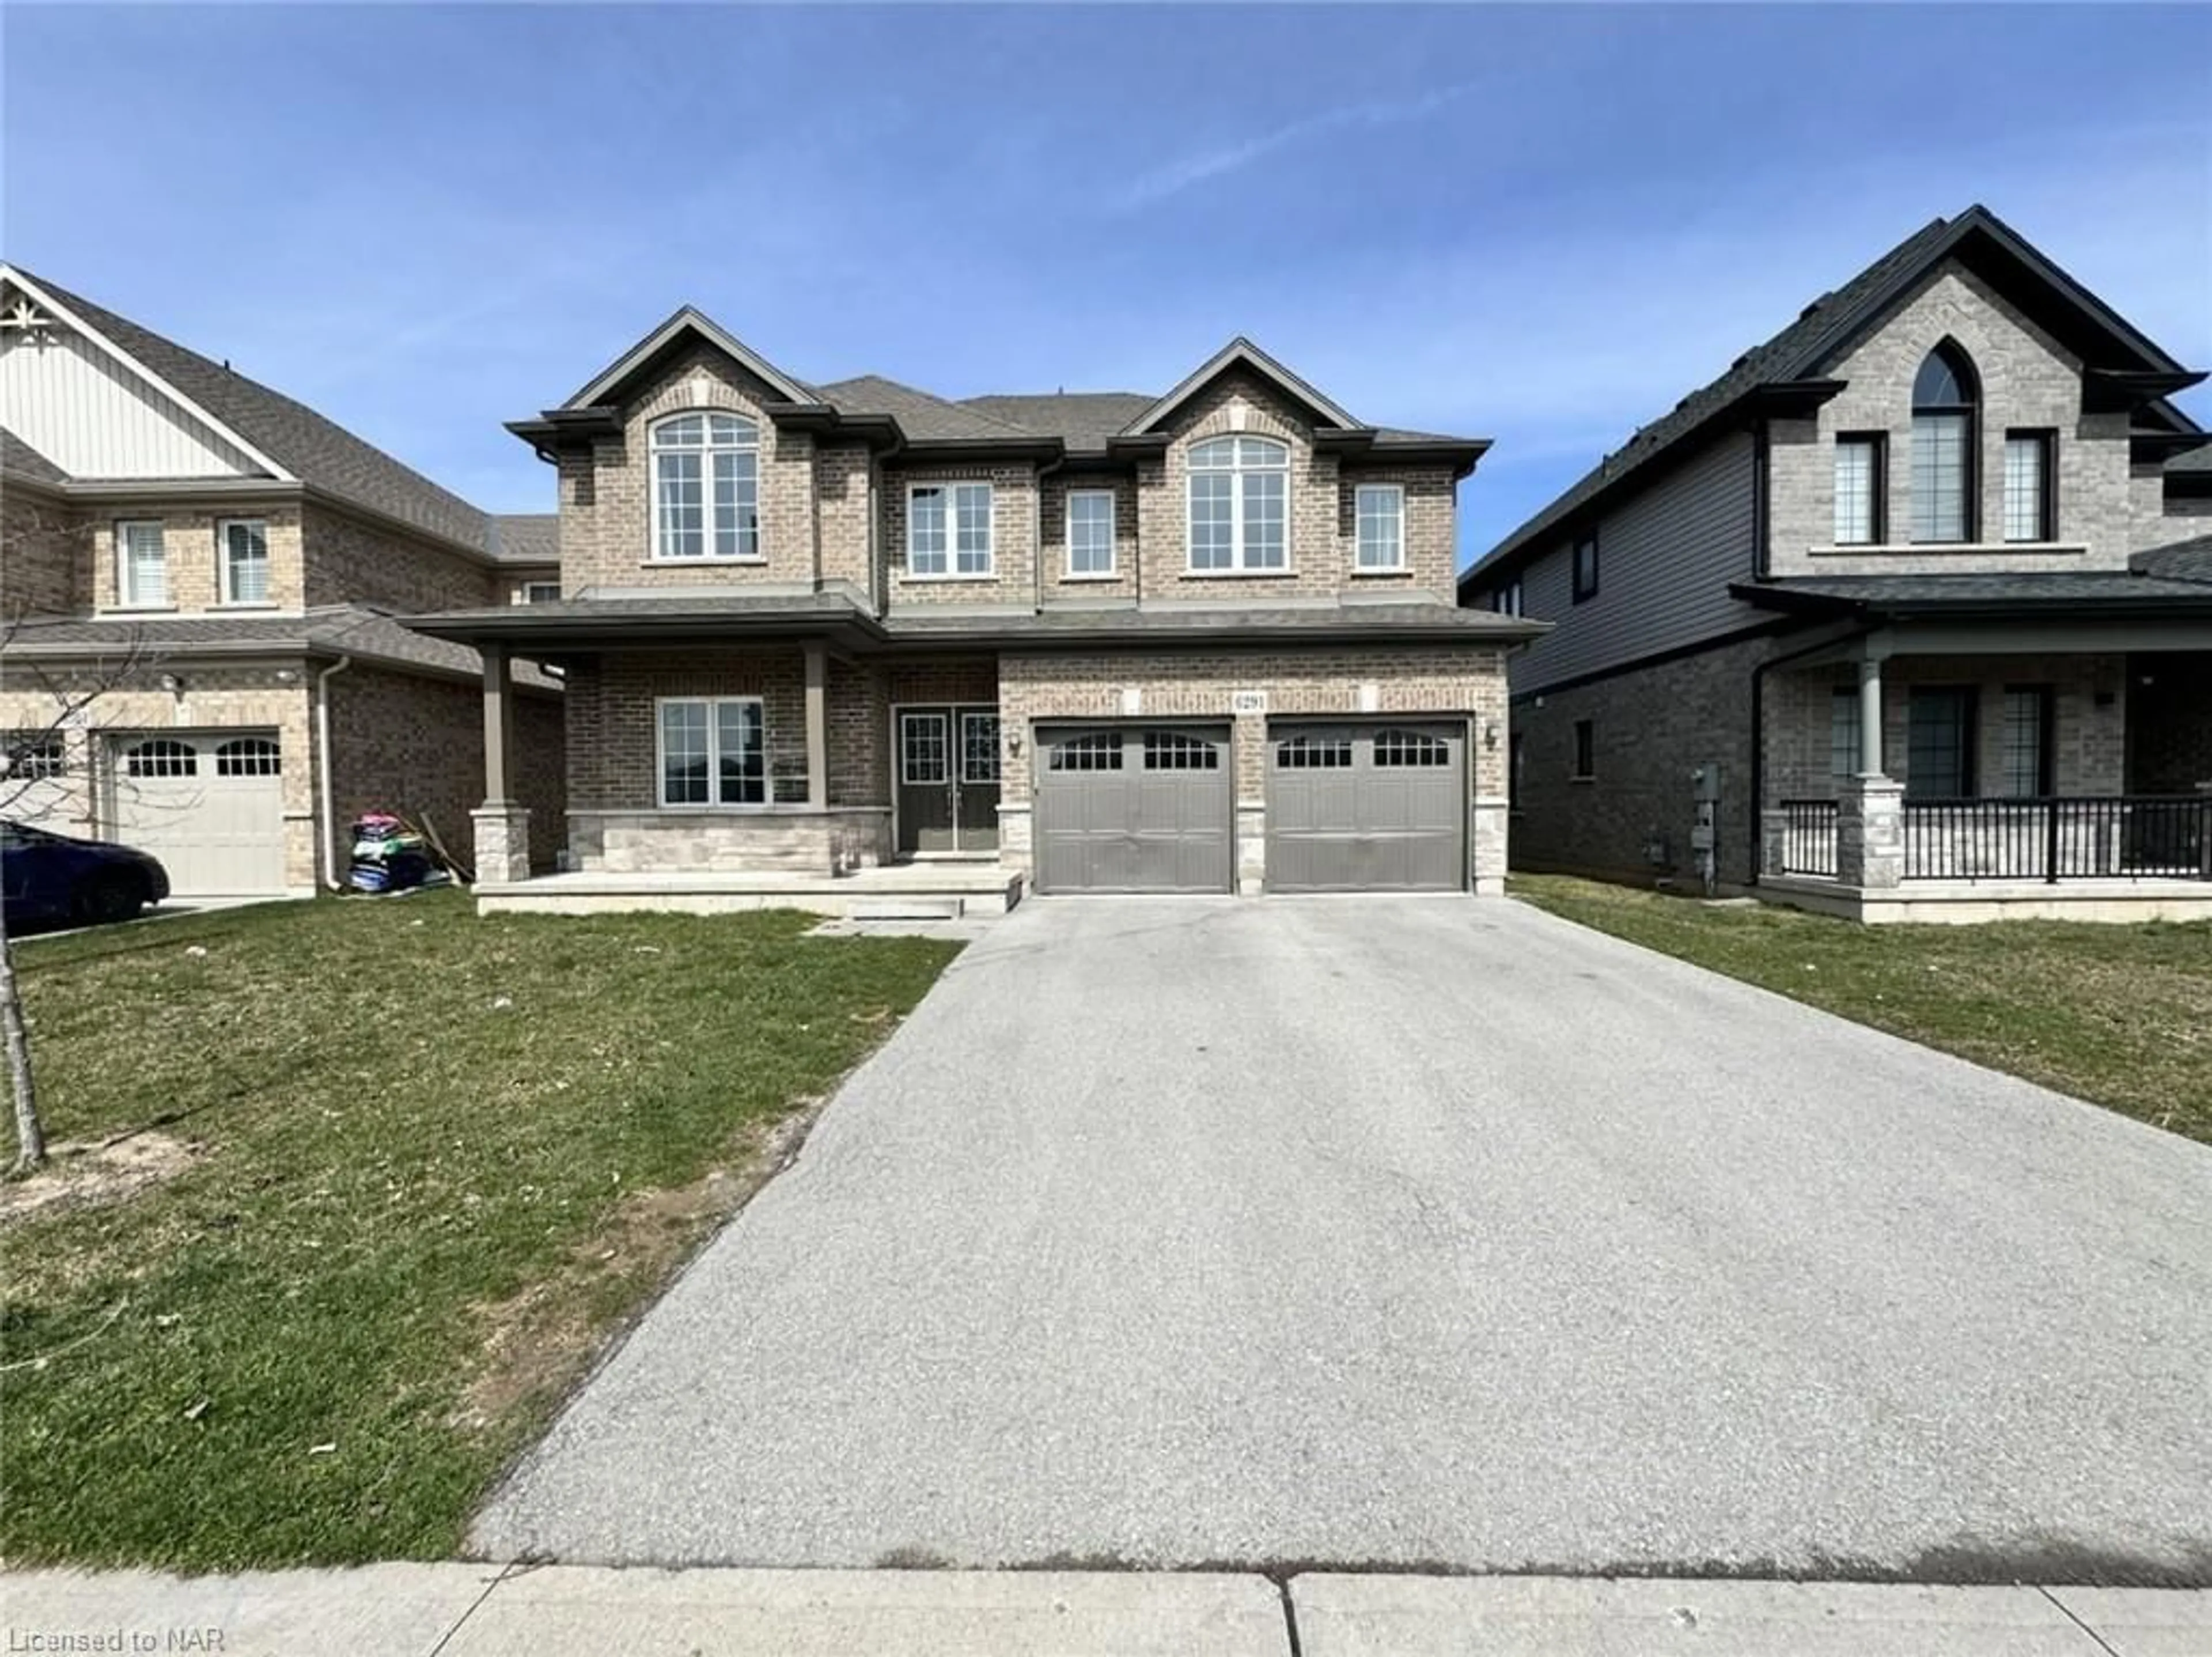 Frontside or backside of a home for 6291 Sam Iorfida Dr, Niagara Falls Ontario L2G 0G9